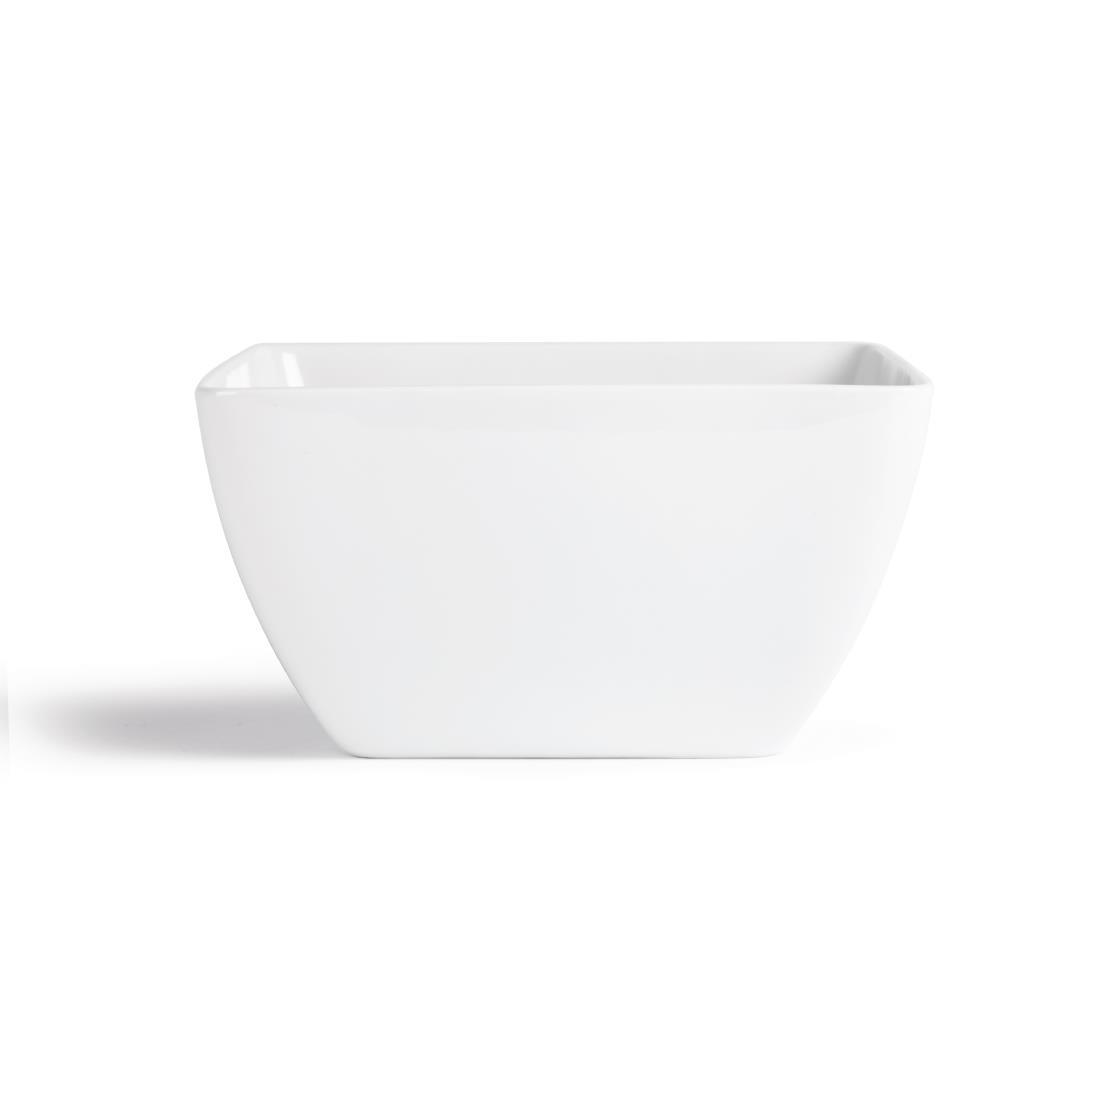 Royal Porcelain Kana Salad Bowls 190mm (Pack of 2) - CG107  - 4